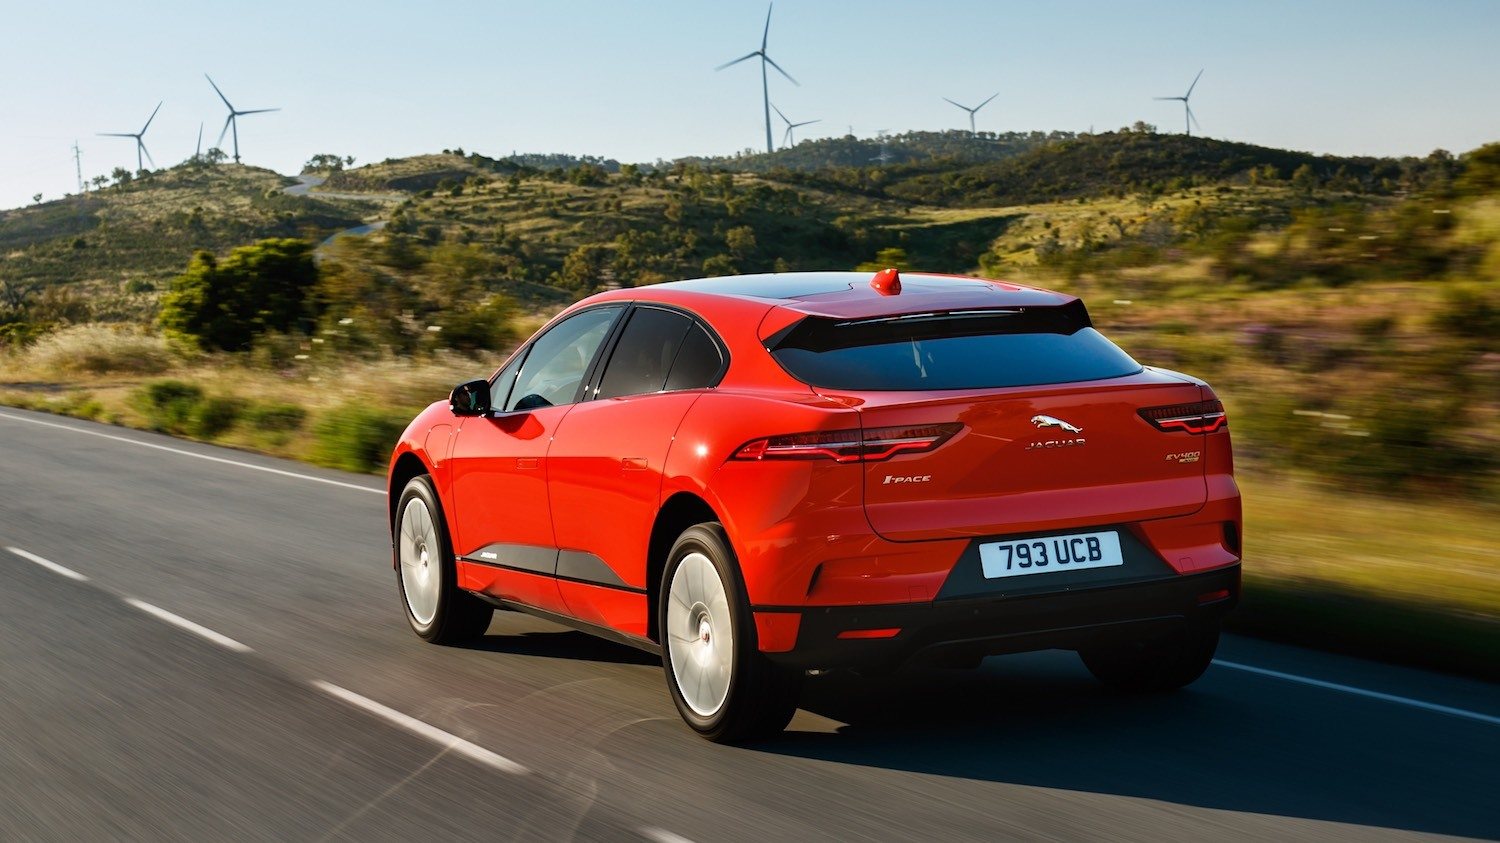 Neil Lyndon reviews the 2018 All-New Jaguar I-Pace Premium Electric SUV 3